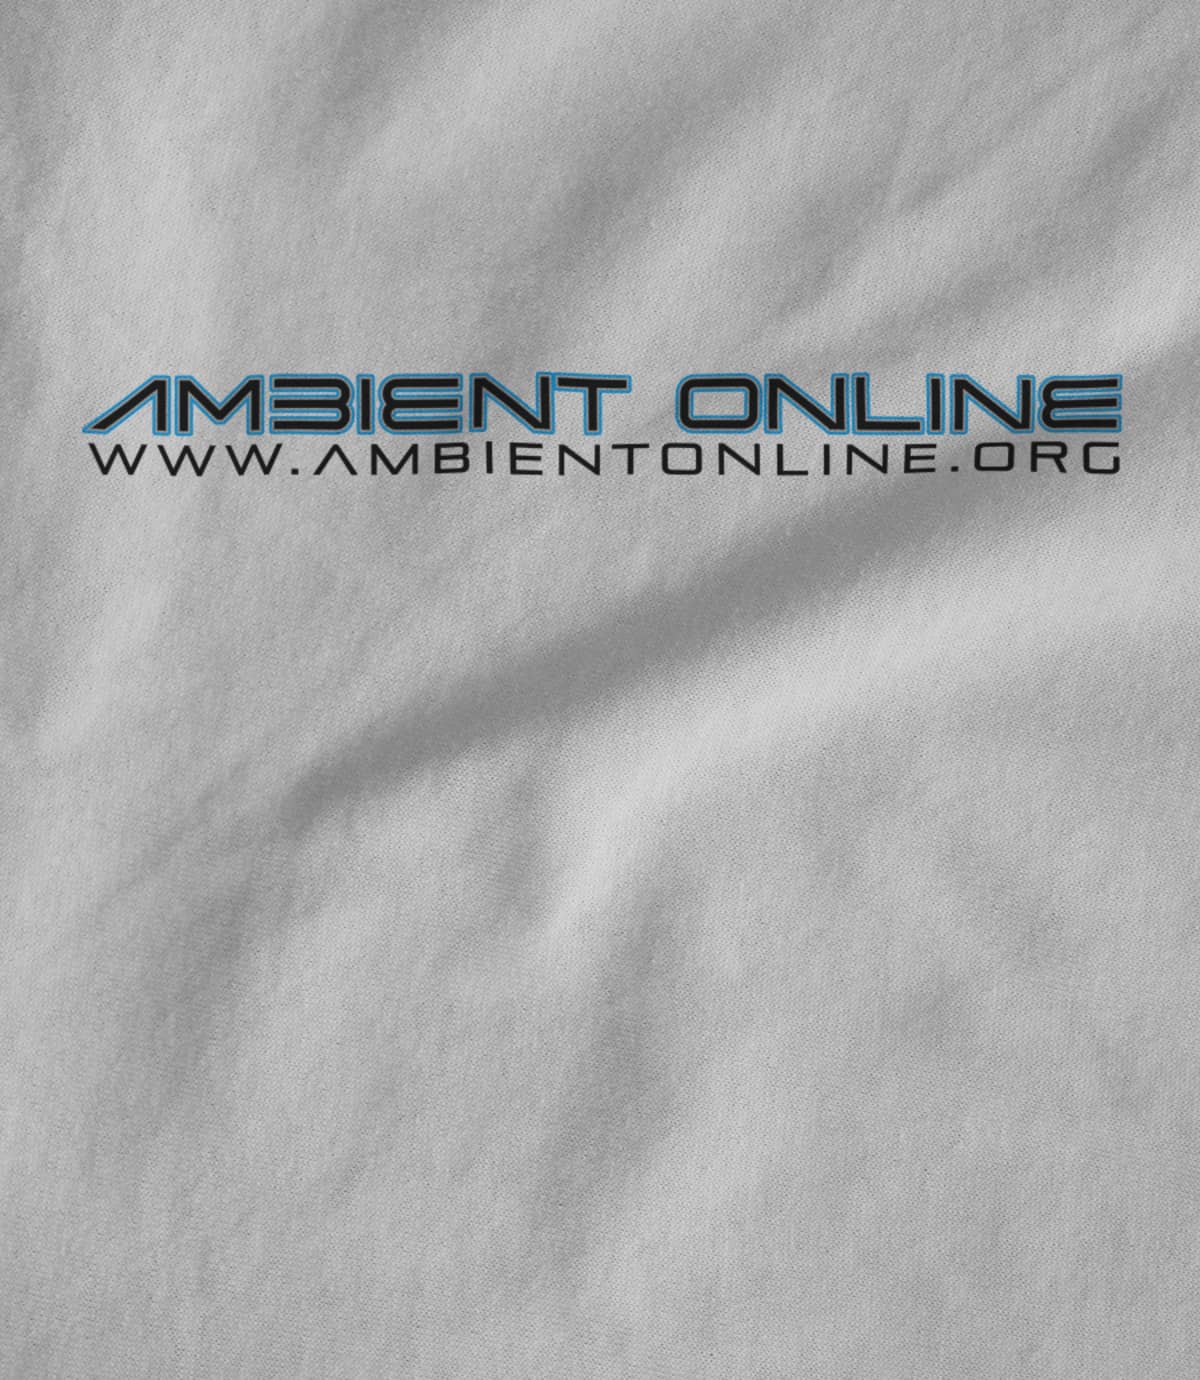 Ambient Online